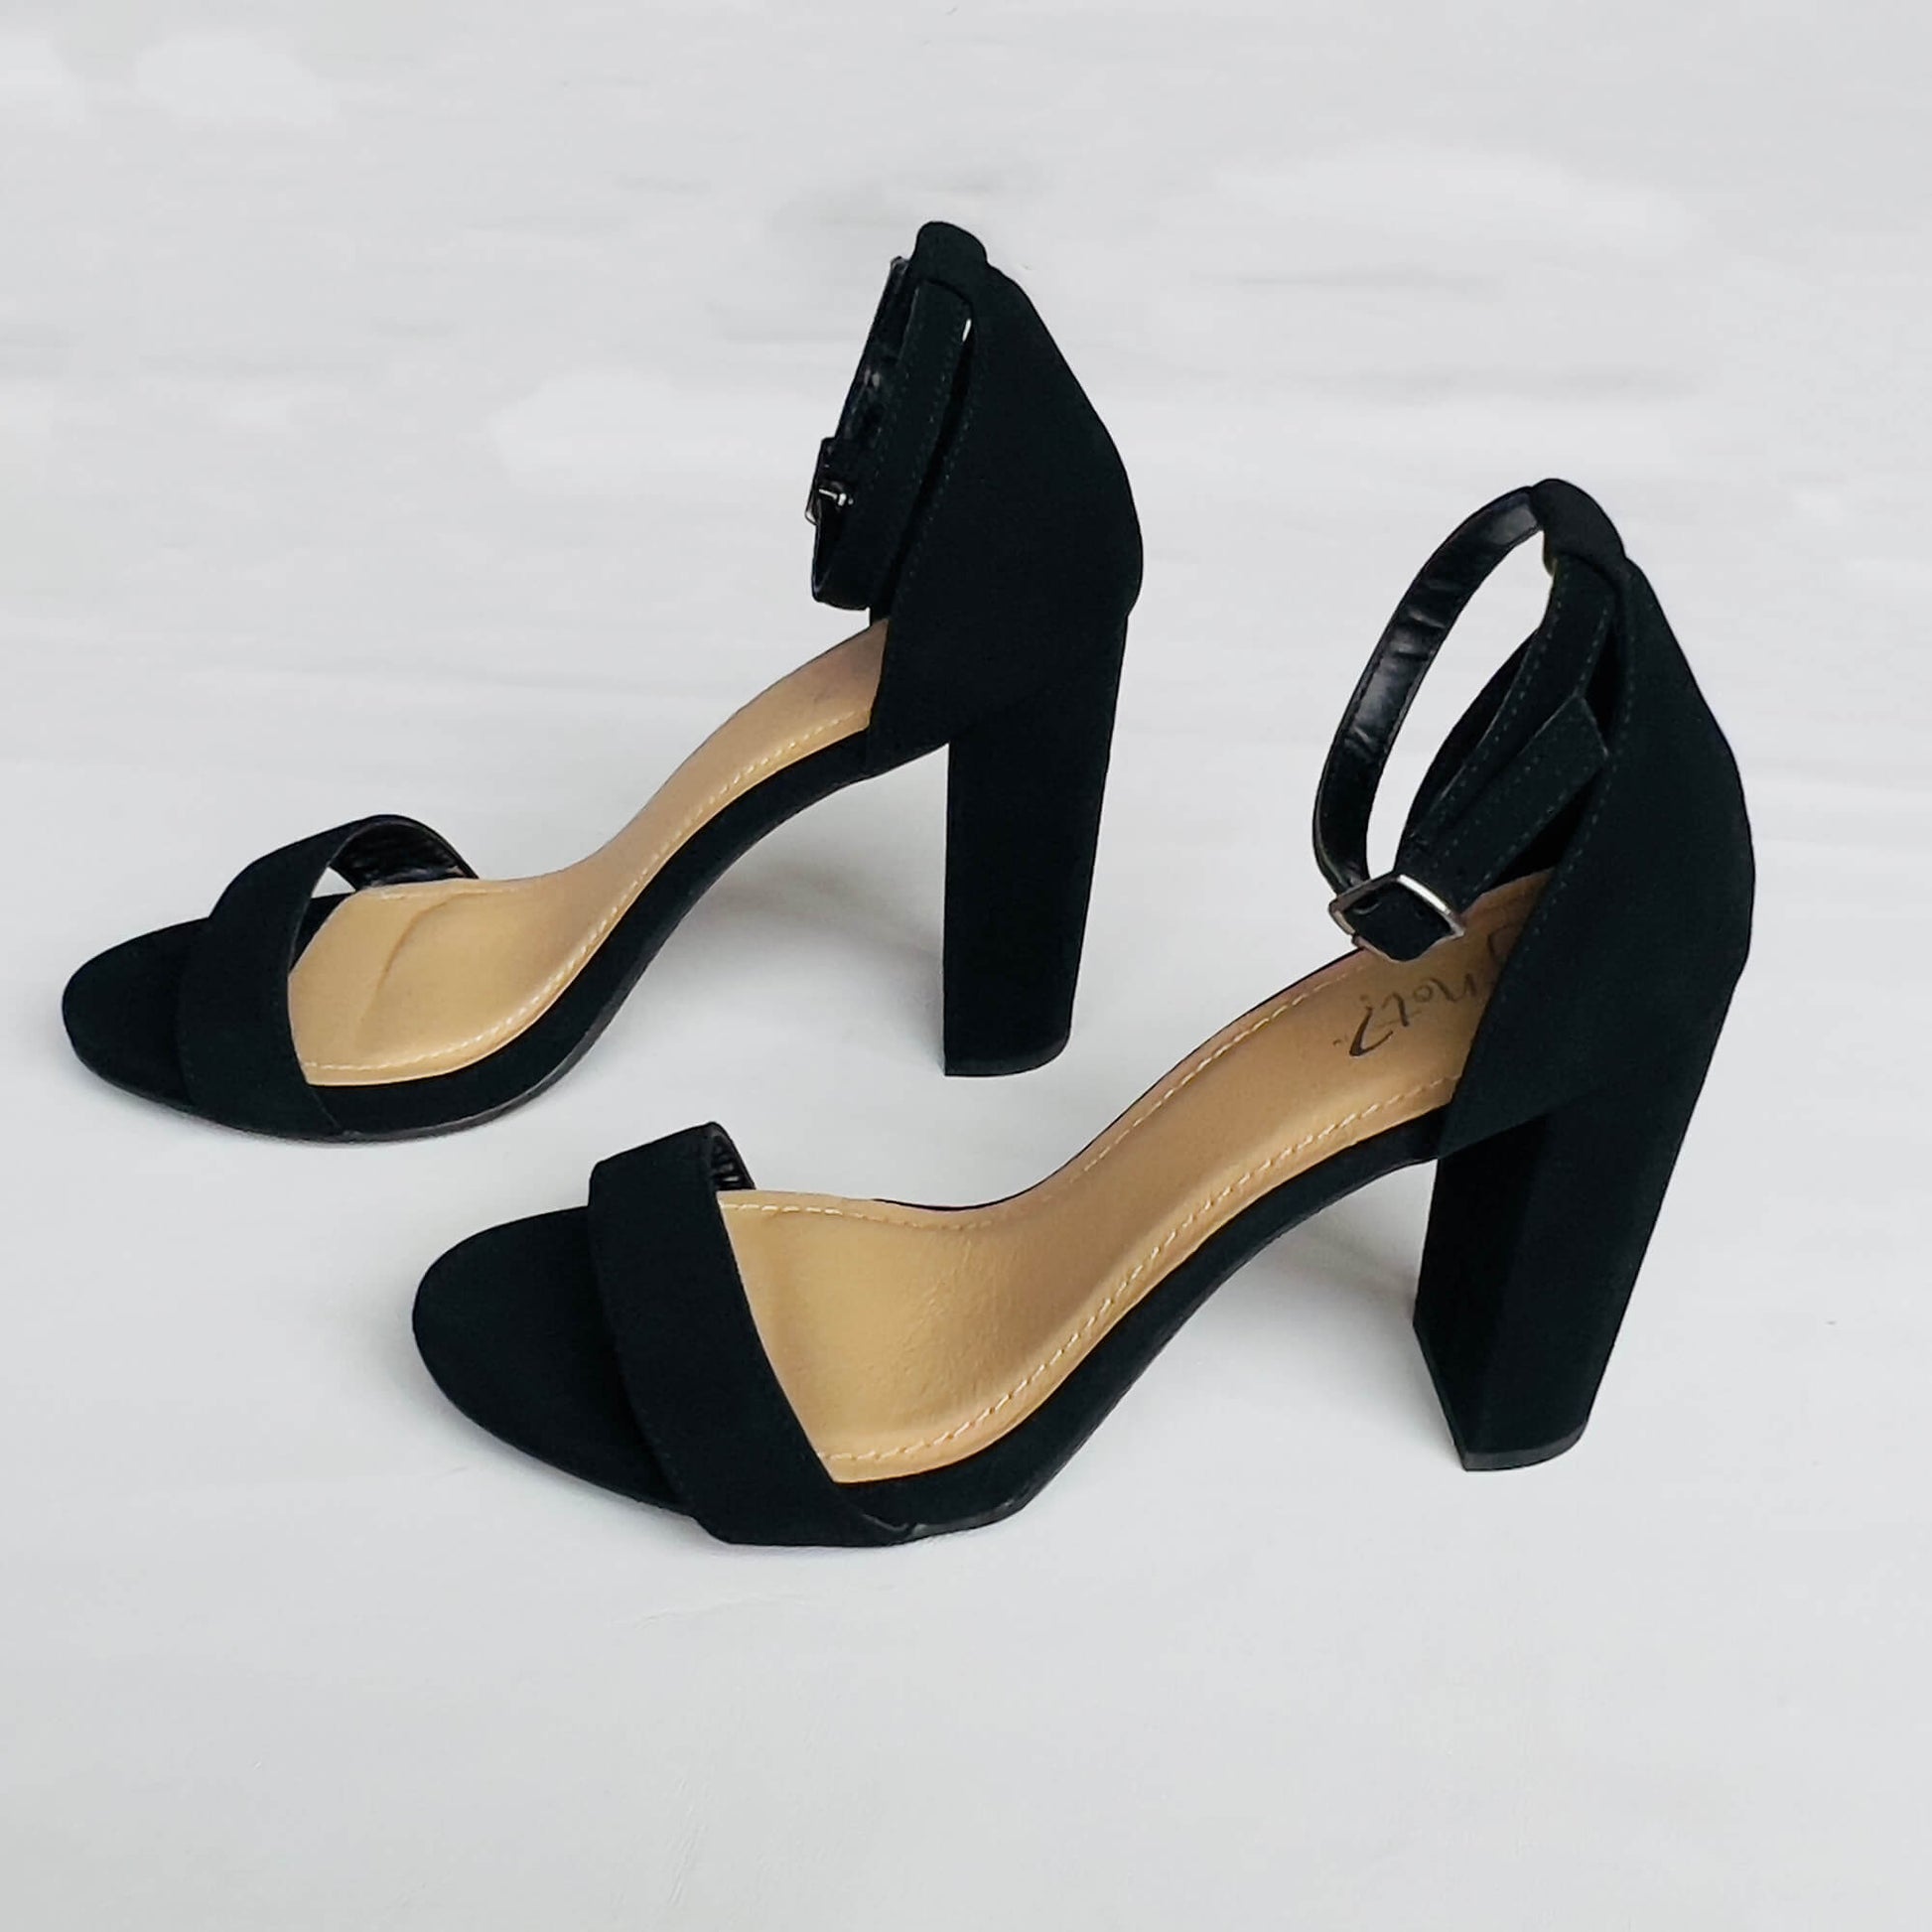 Black-Suede-Ankle-Strap-High-Heel-Sandals-by-Y-Not.-Side-view.-Shop-eBargainsAndDeals.com